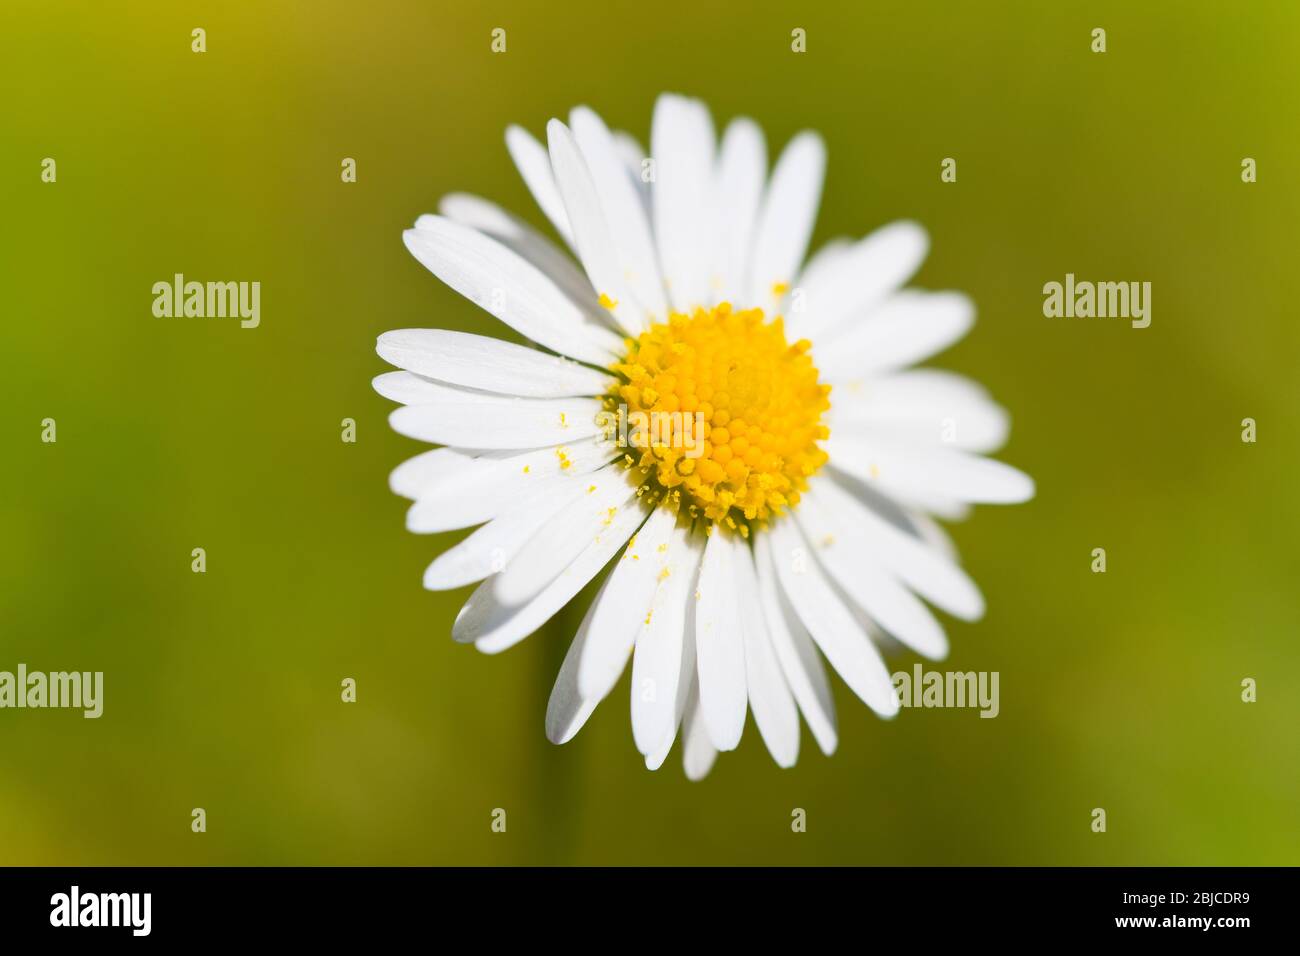 common daisy or bellis perennis Stock Photo